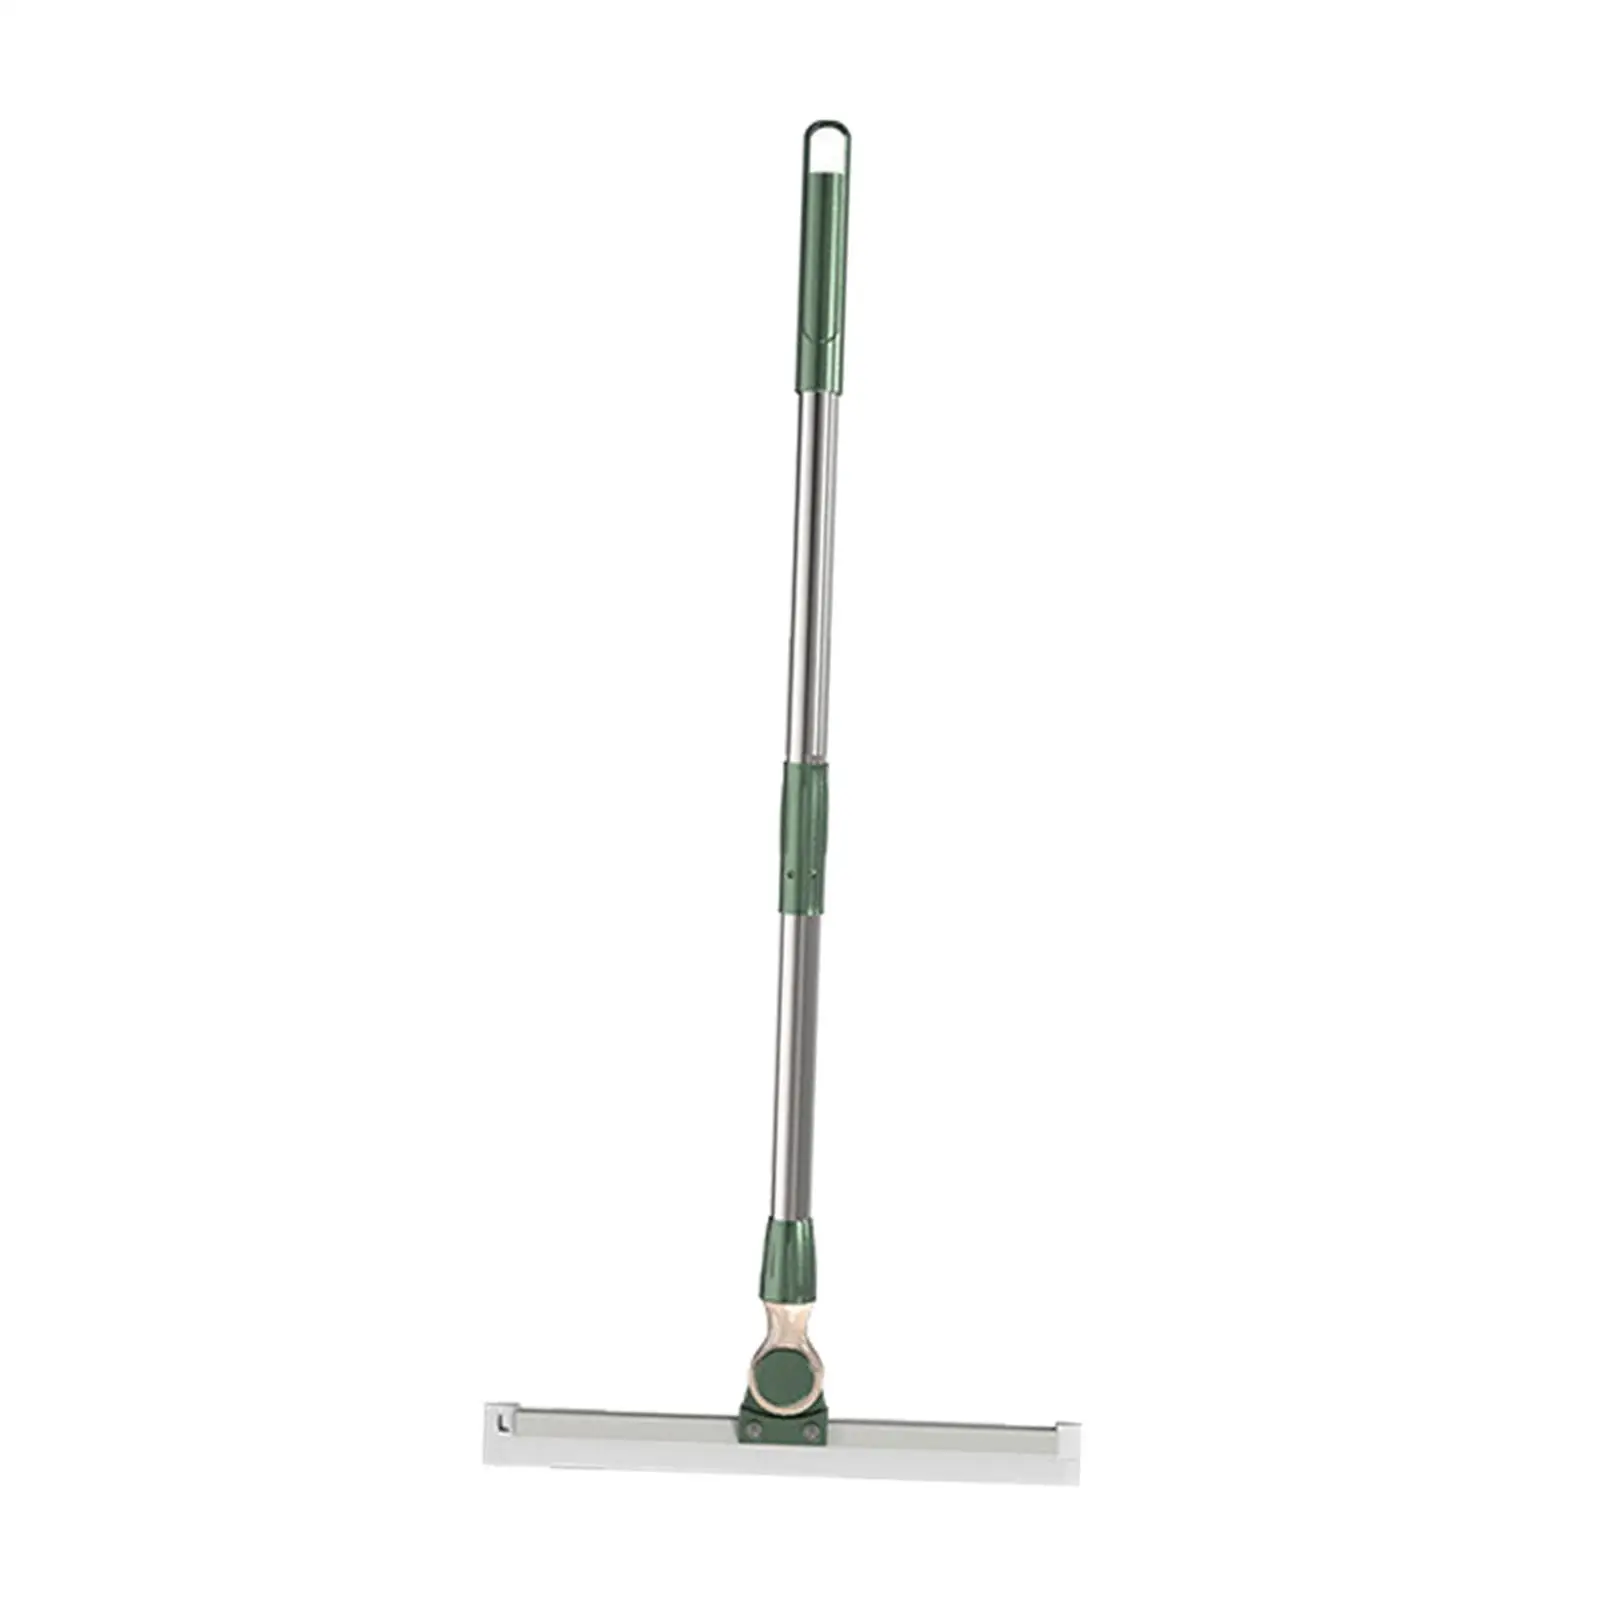 Scraping Sweeper for Bathroom, Window Squeegee, Comfortable Grip, Nonstick